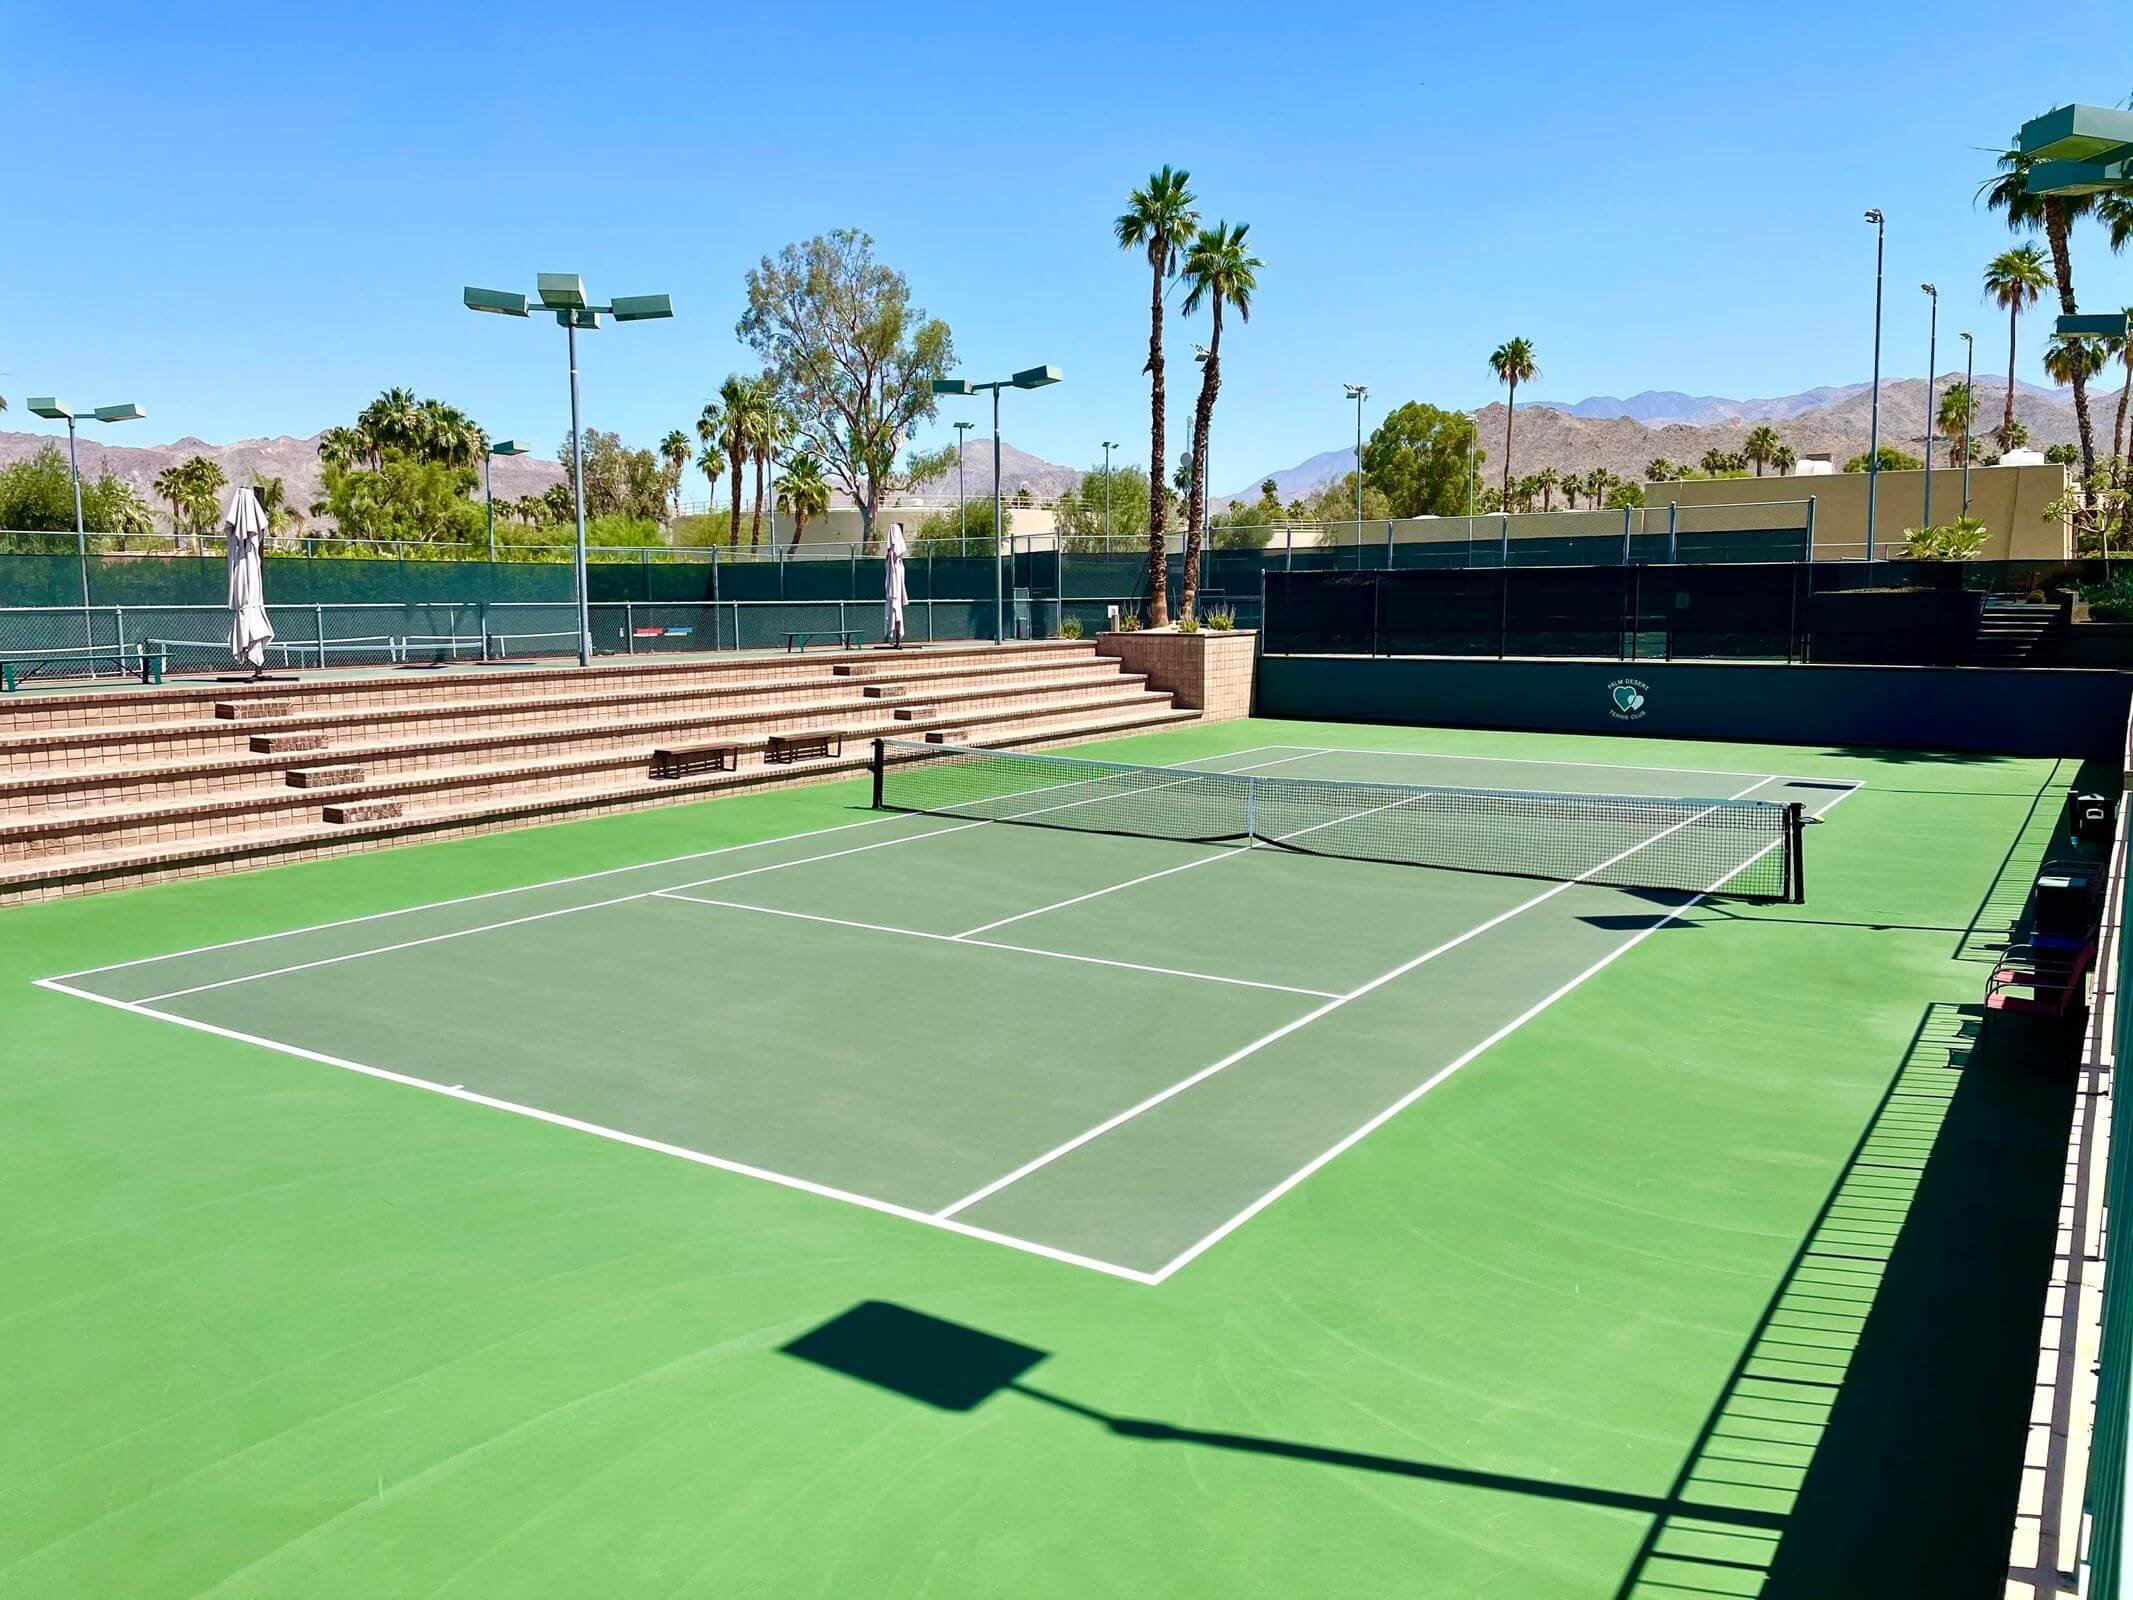 Palm Desert Tennis Club Palm Desert 92260